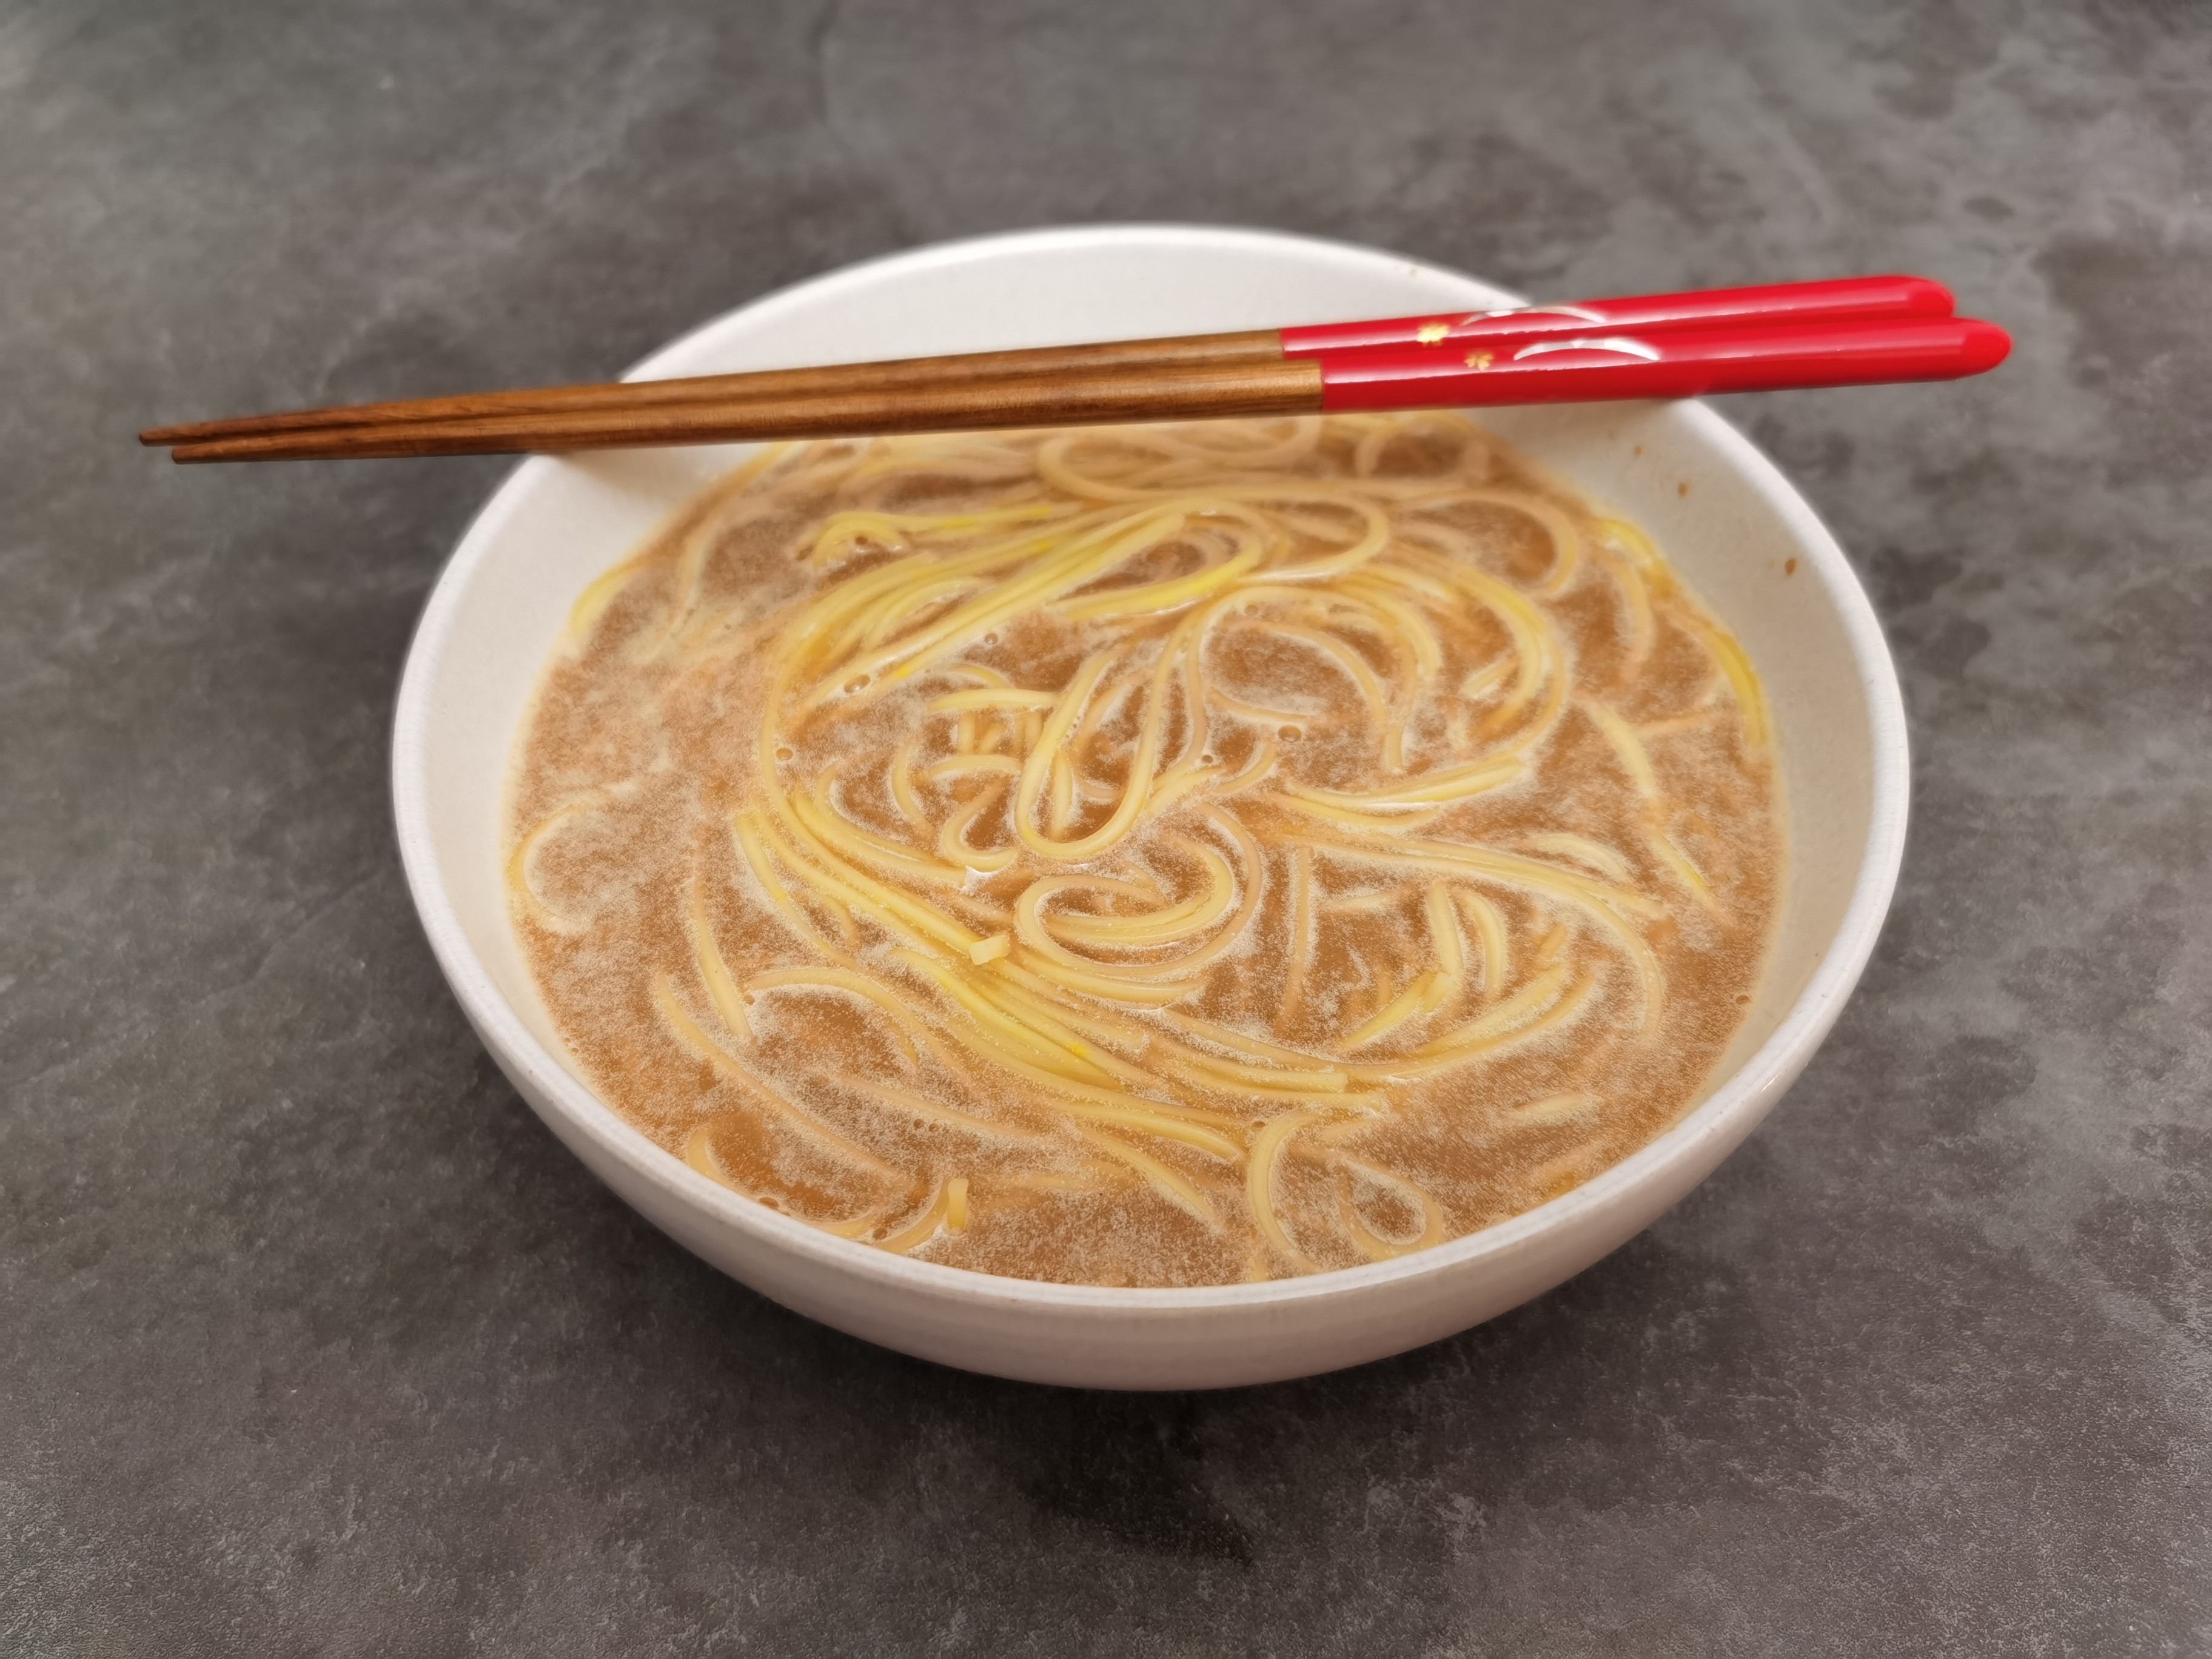 Cooked Restaurant Style Ramen “ShoyuTonkotsu” taste by Menraku